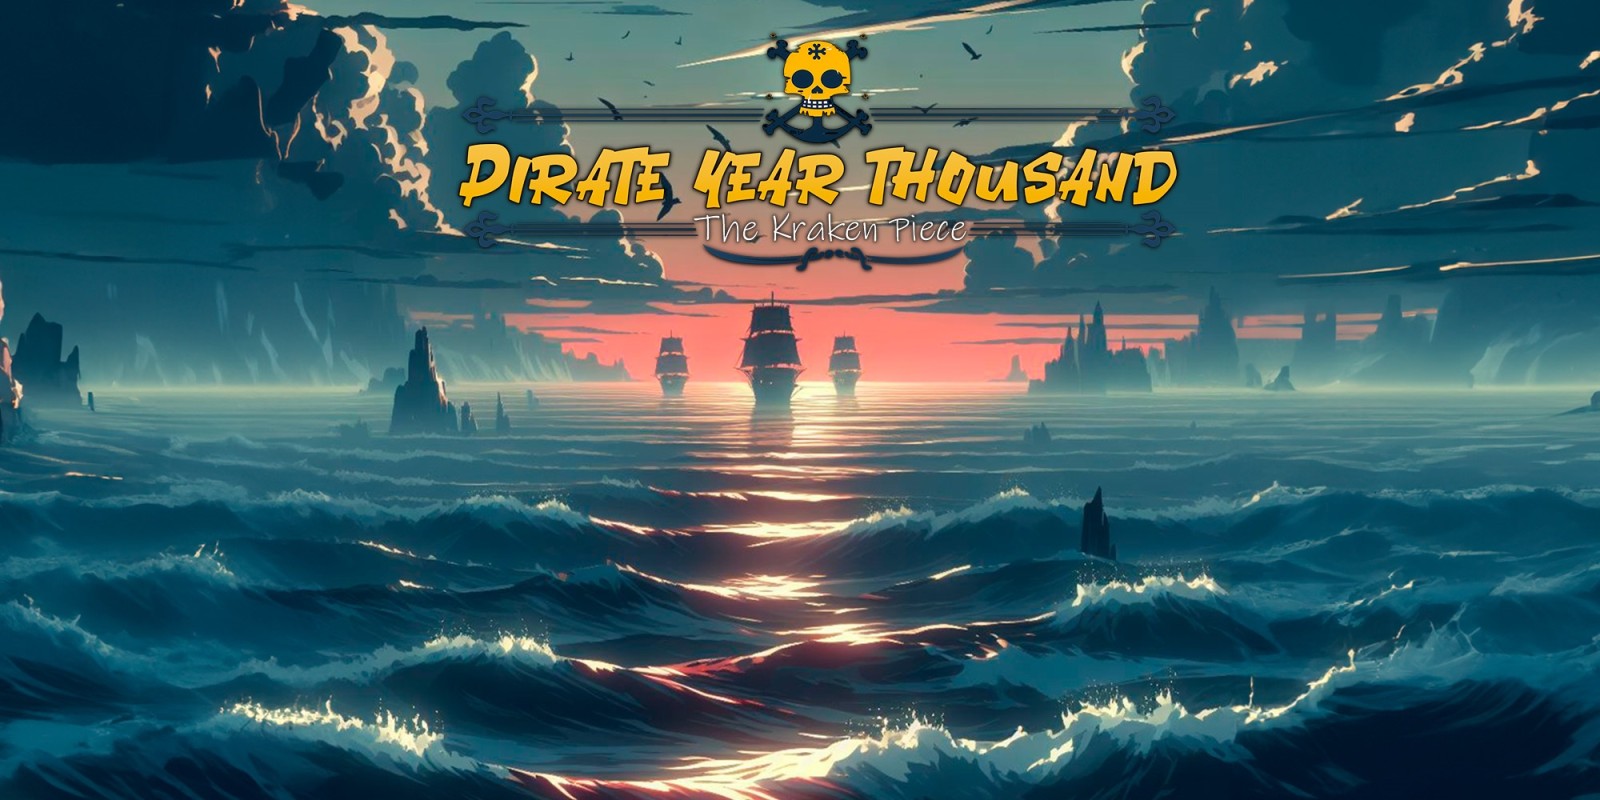 Pirate Year Thousand: The Kraken Piece